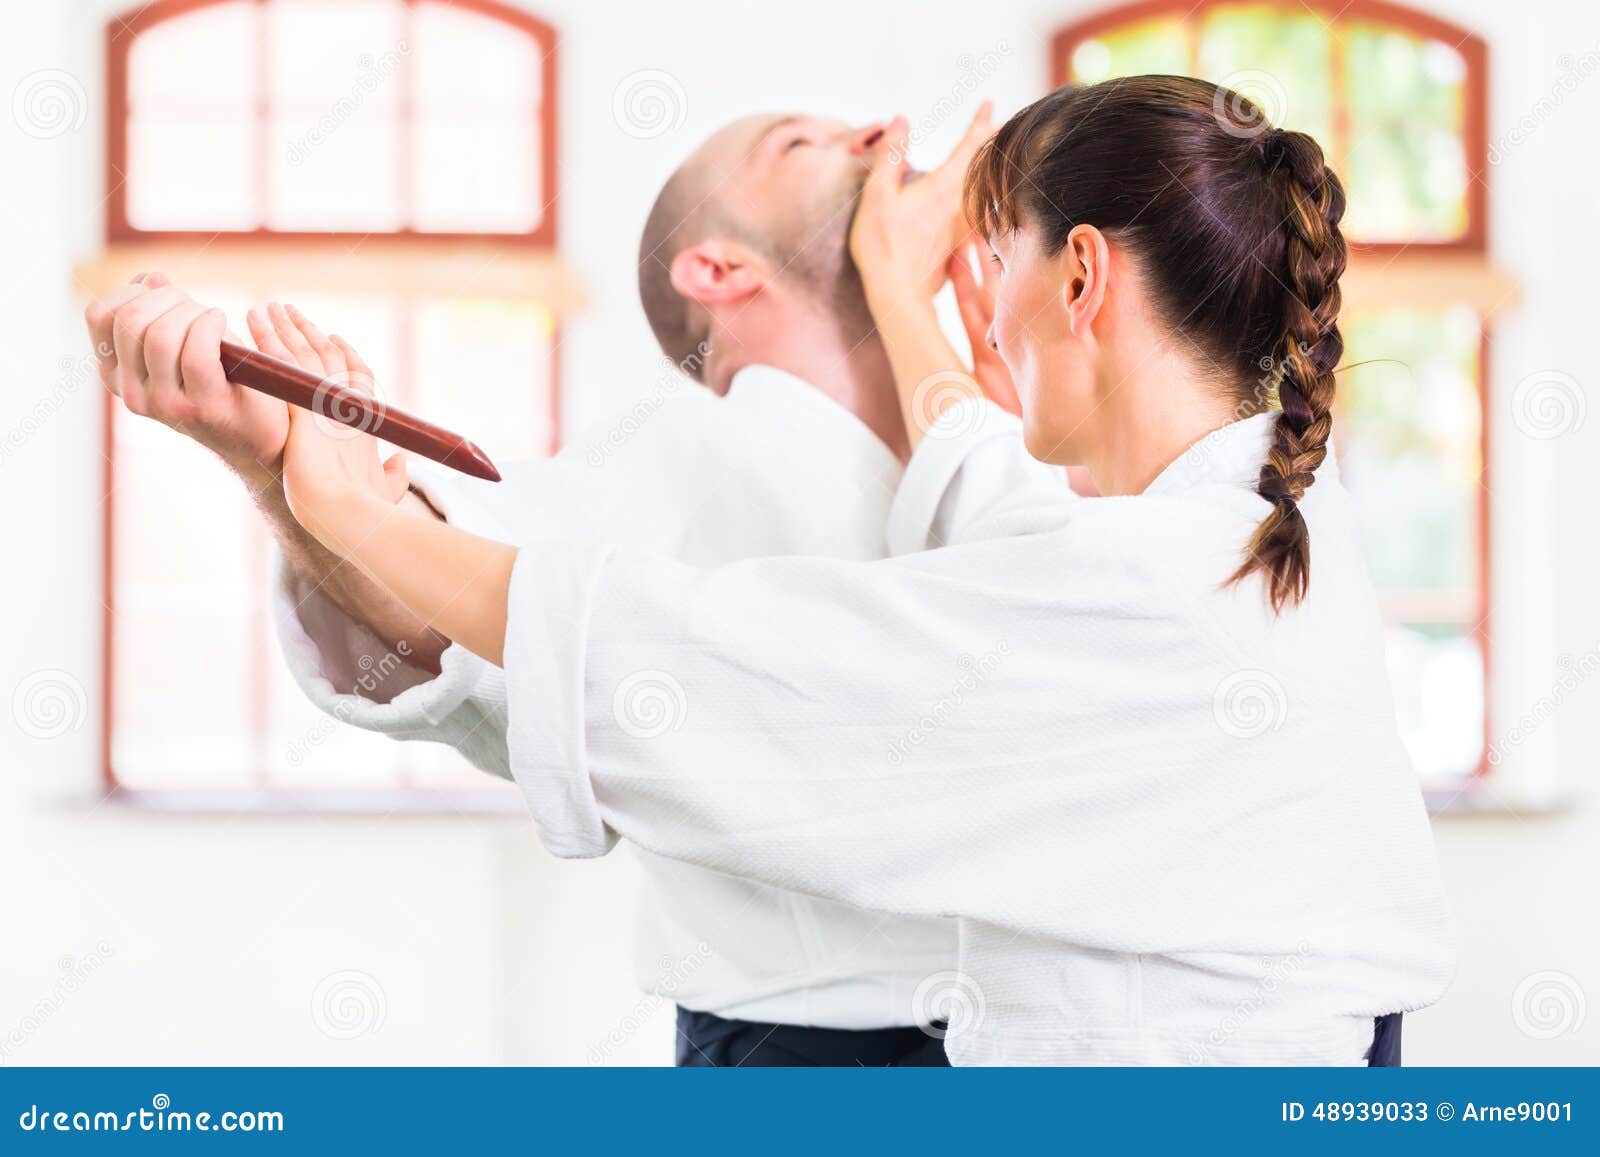 https://thumbs.dreamstime.com/z/man-woman-having-aikido-knife-fight-women-fighting-wooden-knifes-training-martial-arts-school-48939033.jpg